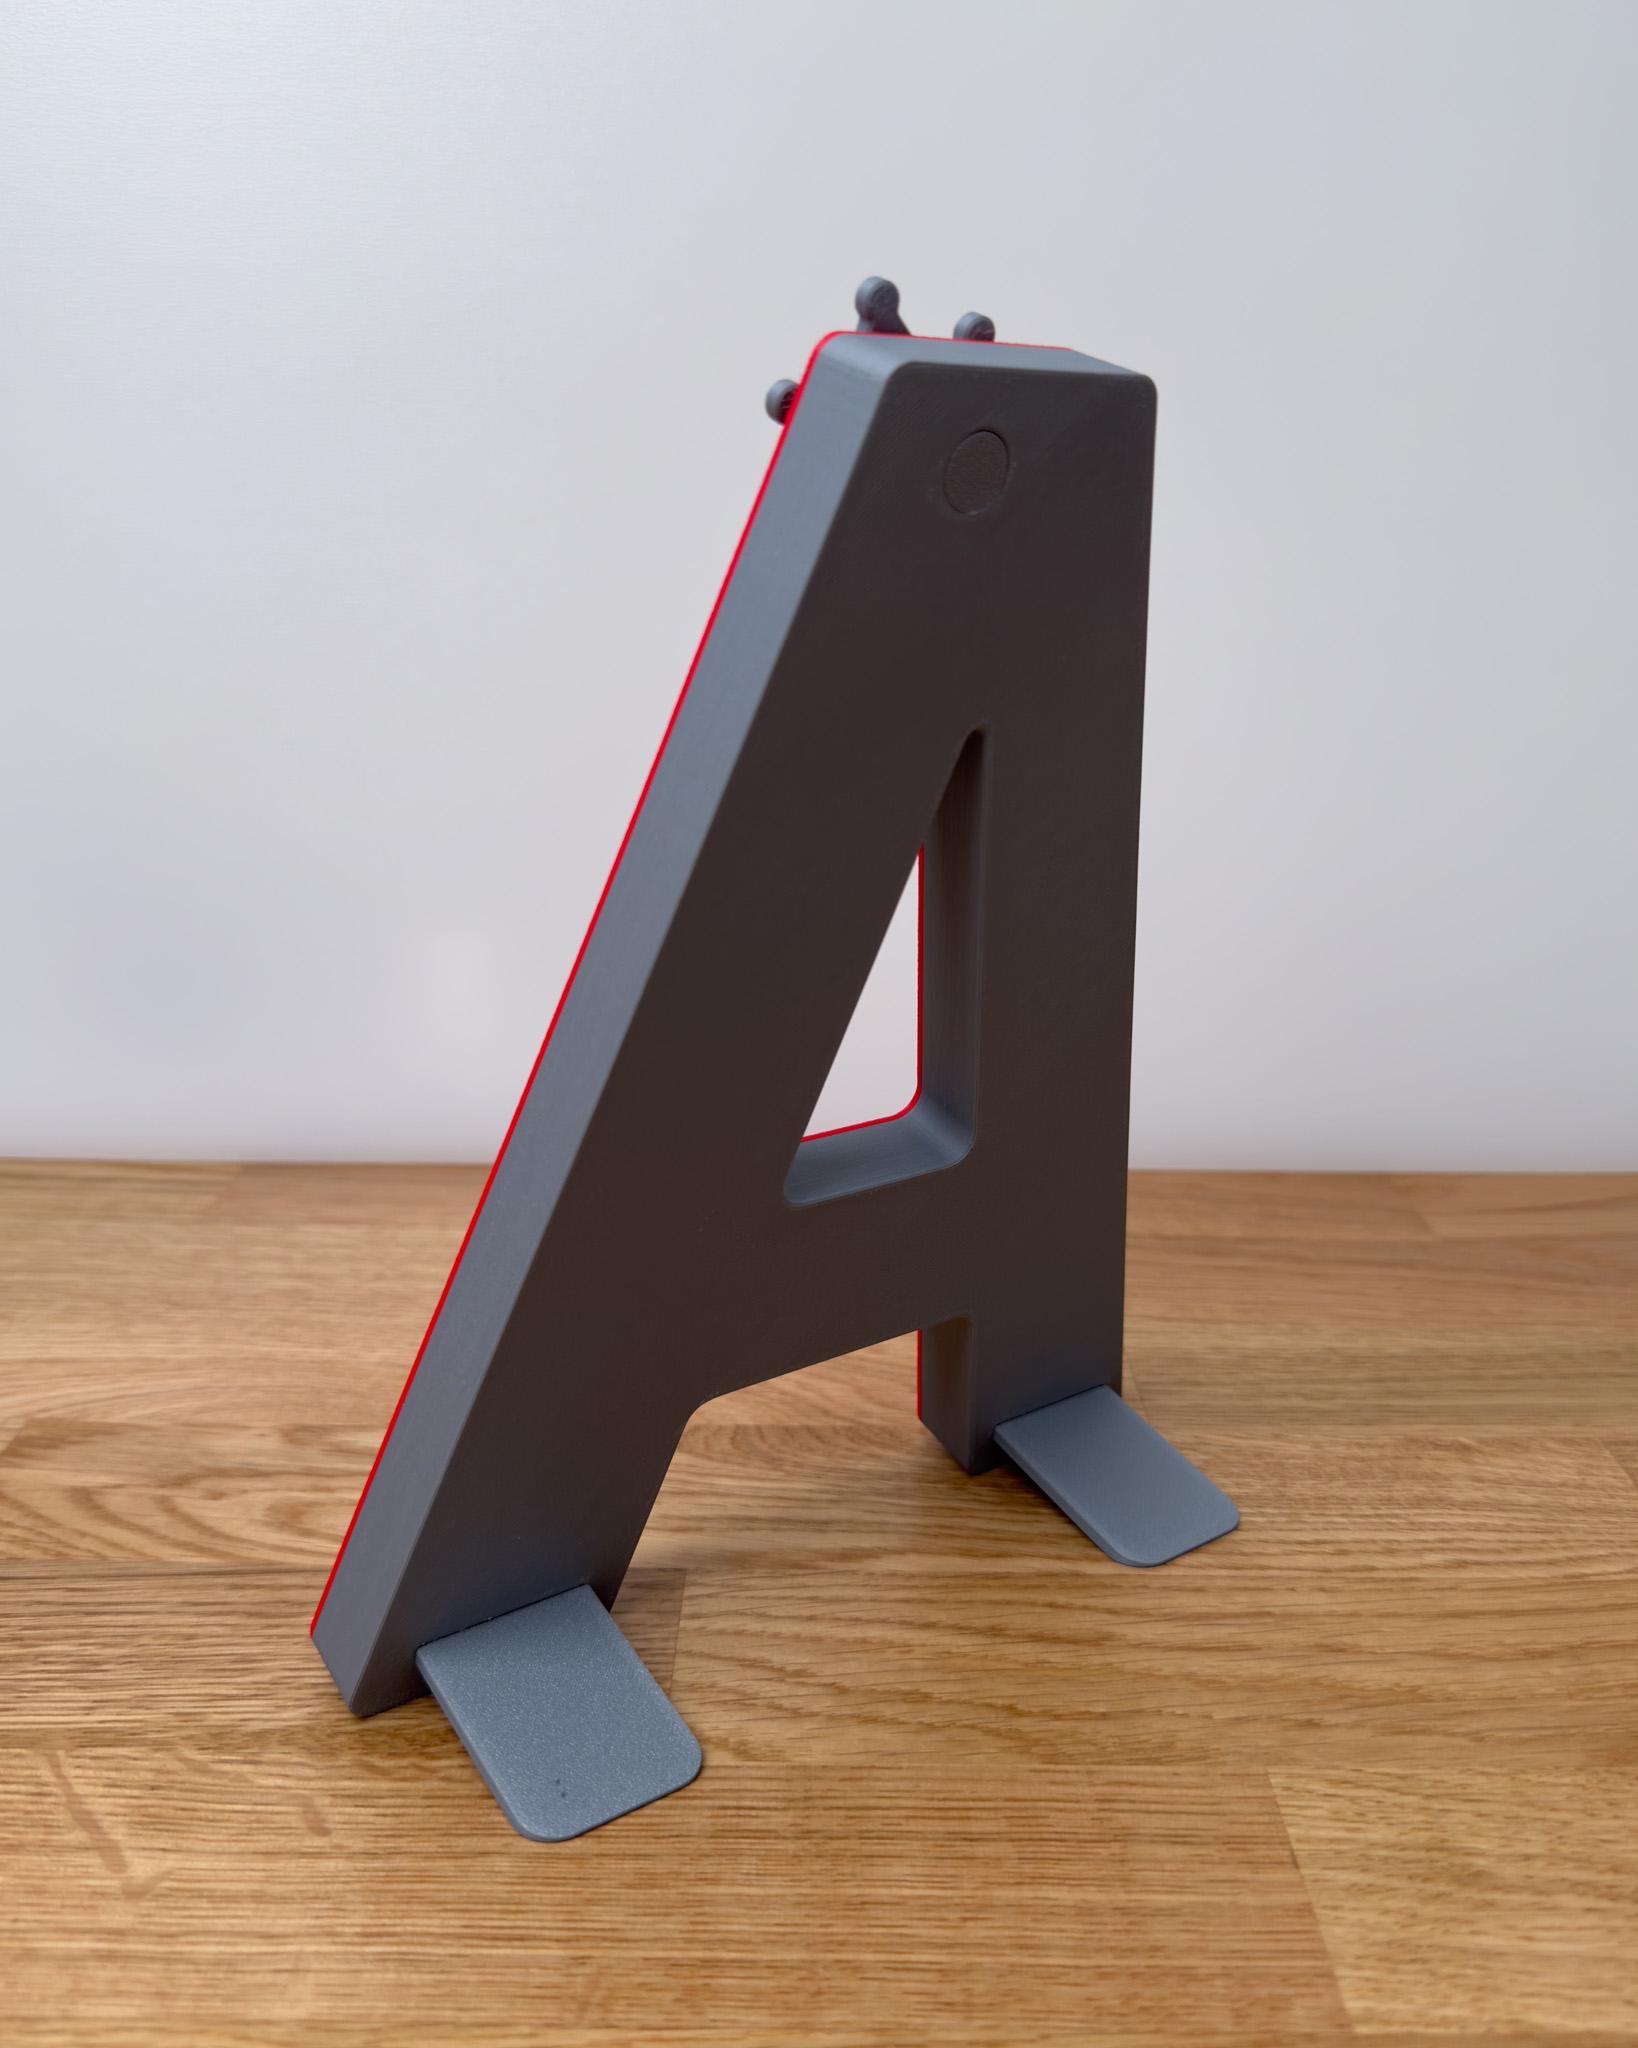 3D Letter N - by TeeTi3D 3d model